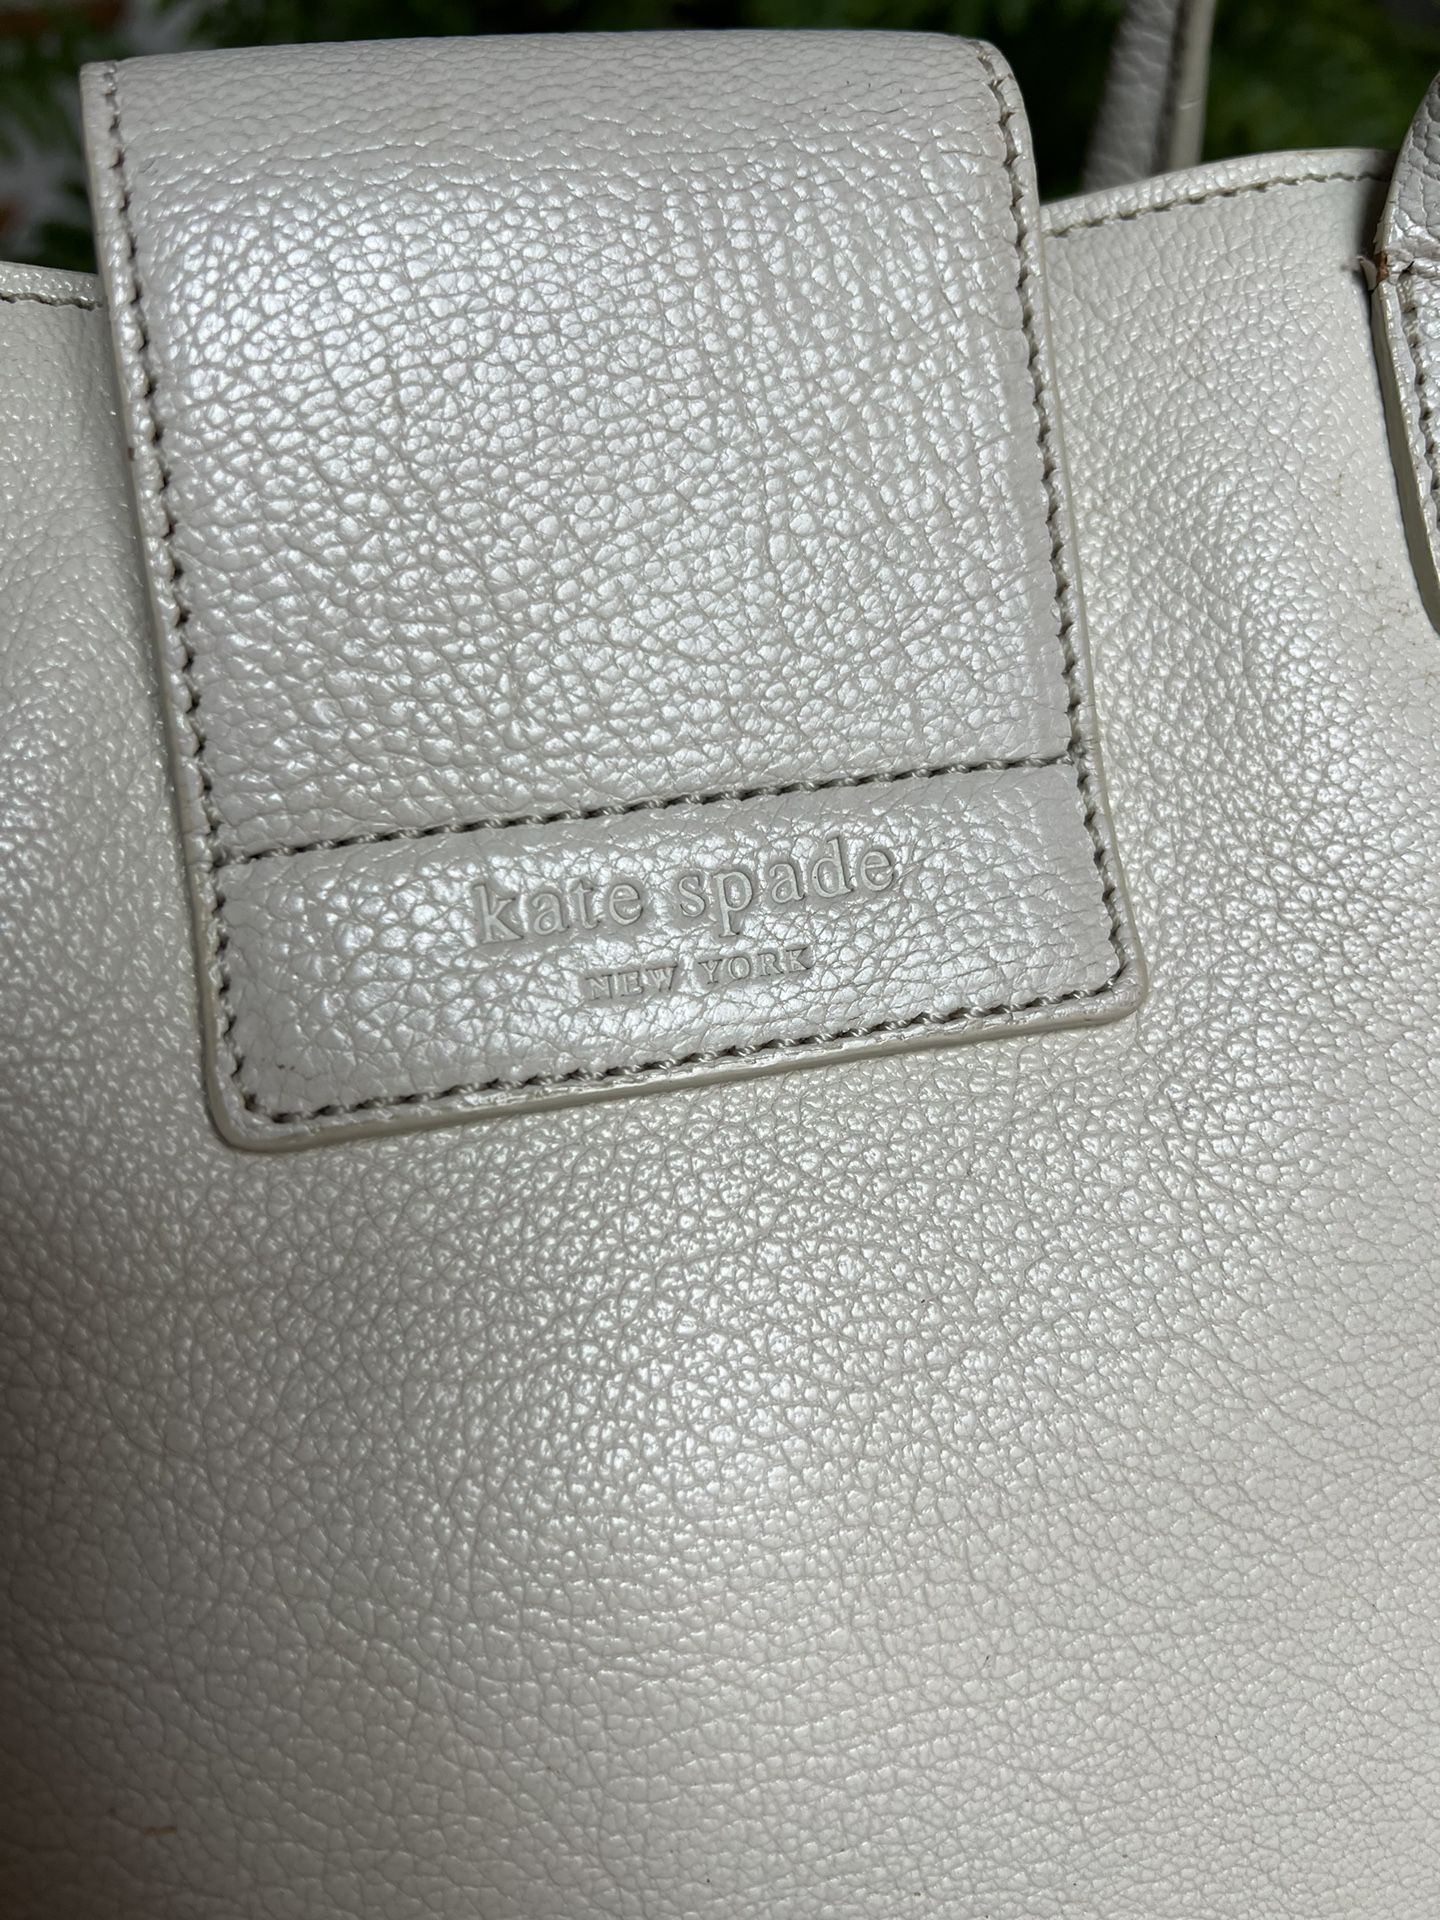 Kate Spade Leather Tote Bag - White 